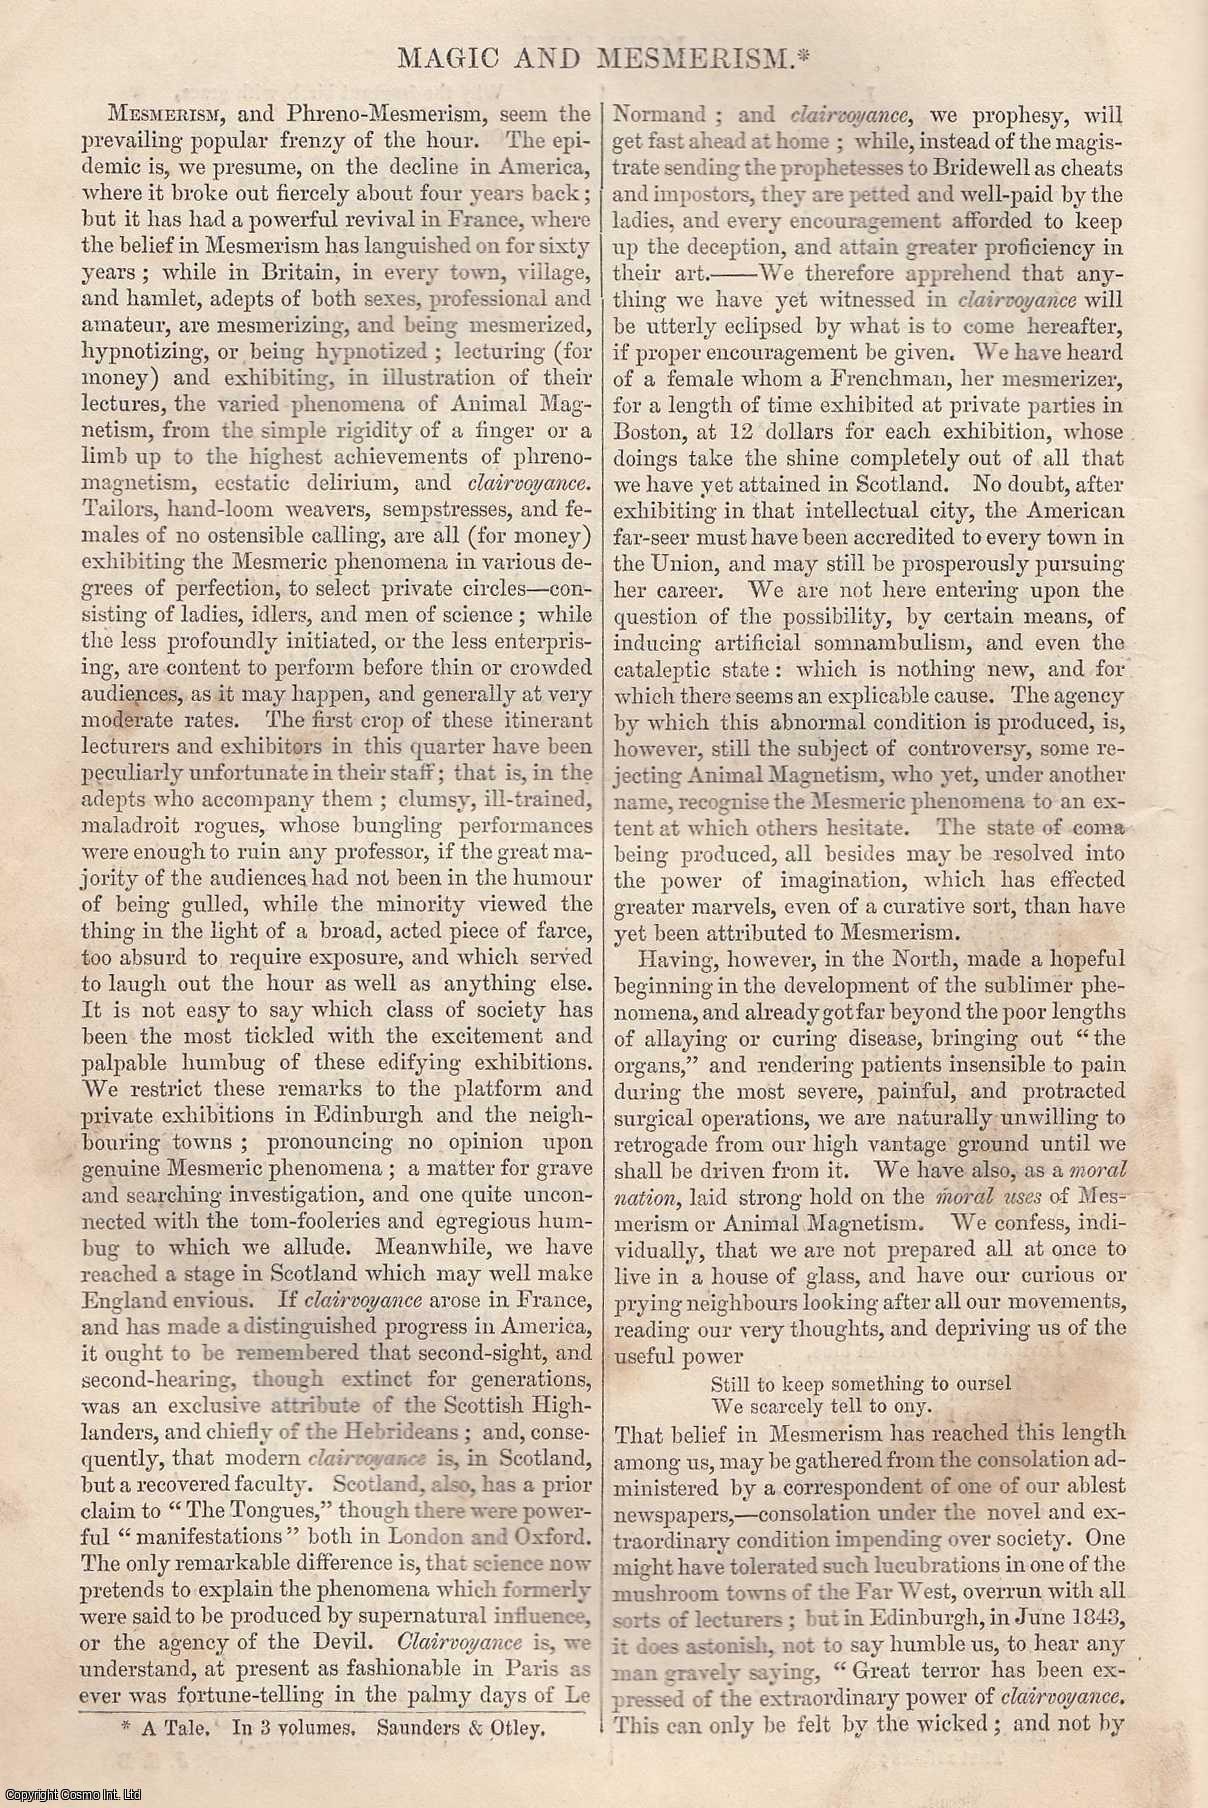 Johnstone, Christian - Magic and Mesmerism. An original article from Tait's Edinburgh Magazine, 1843.